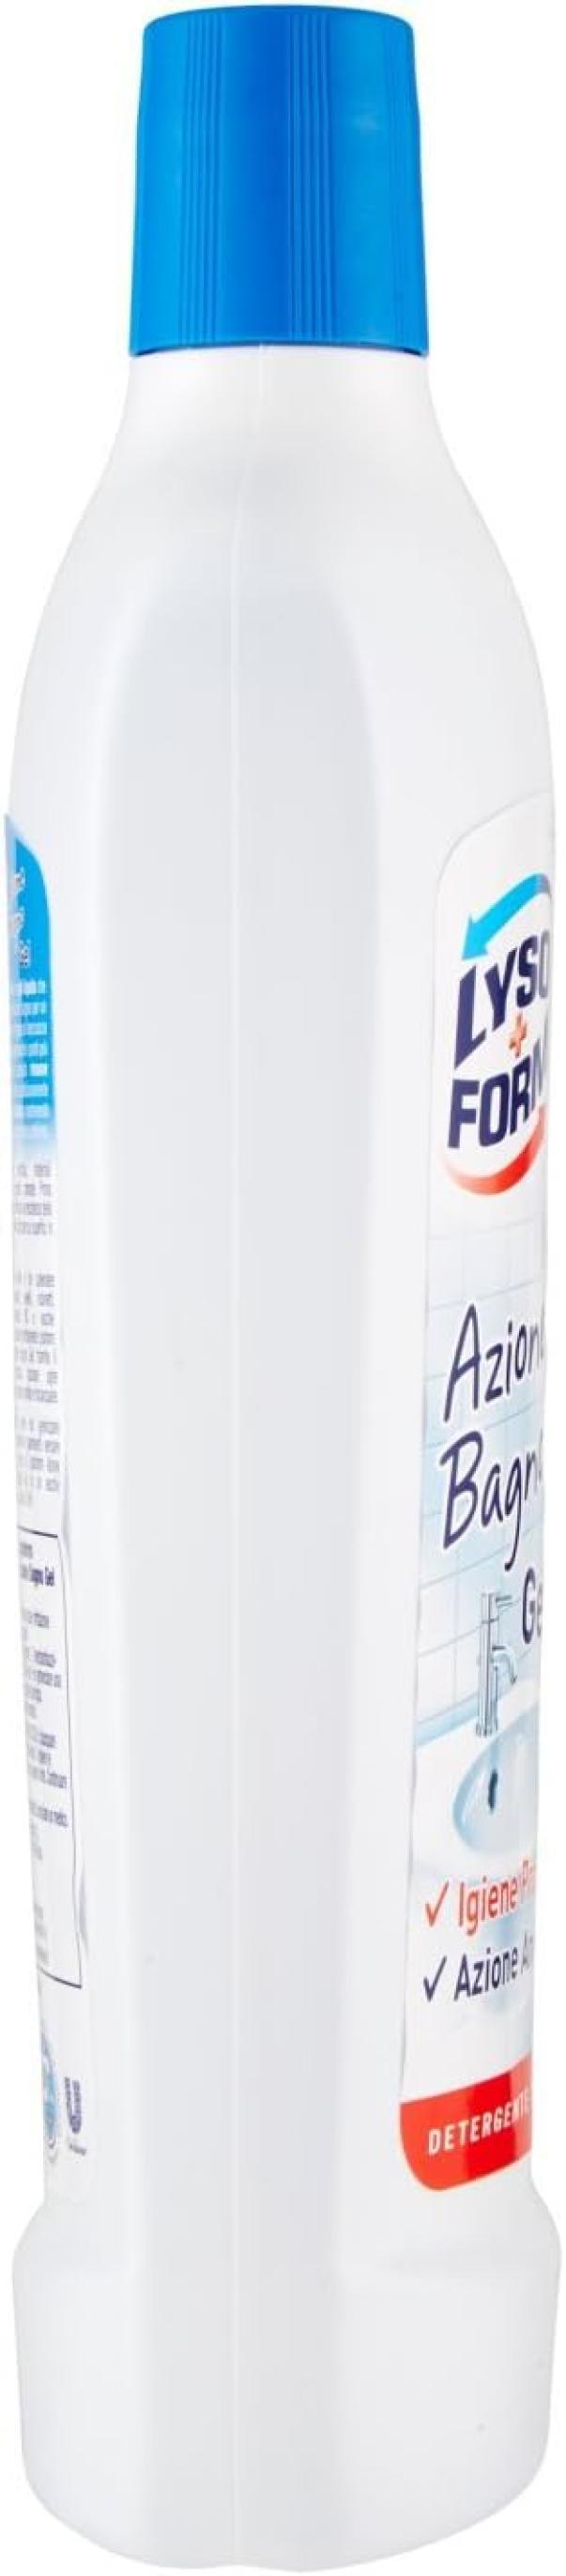 detergente-igienizzante-gel-azione-bagno-lysoform-750-ml-2